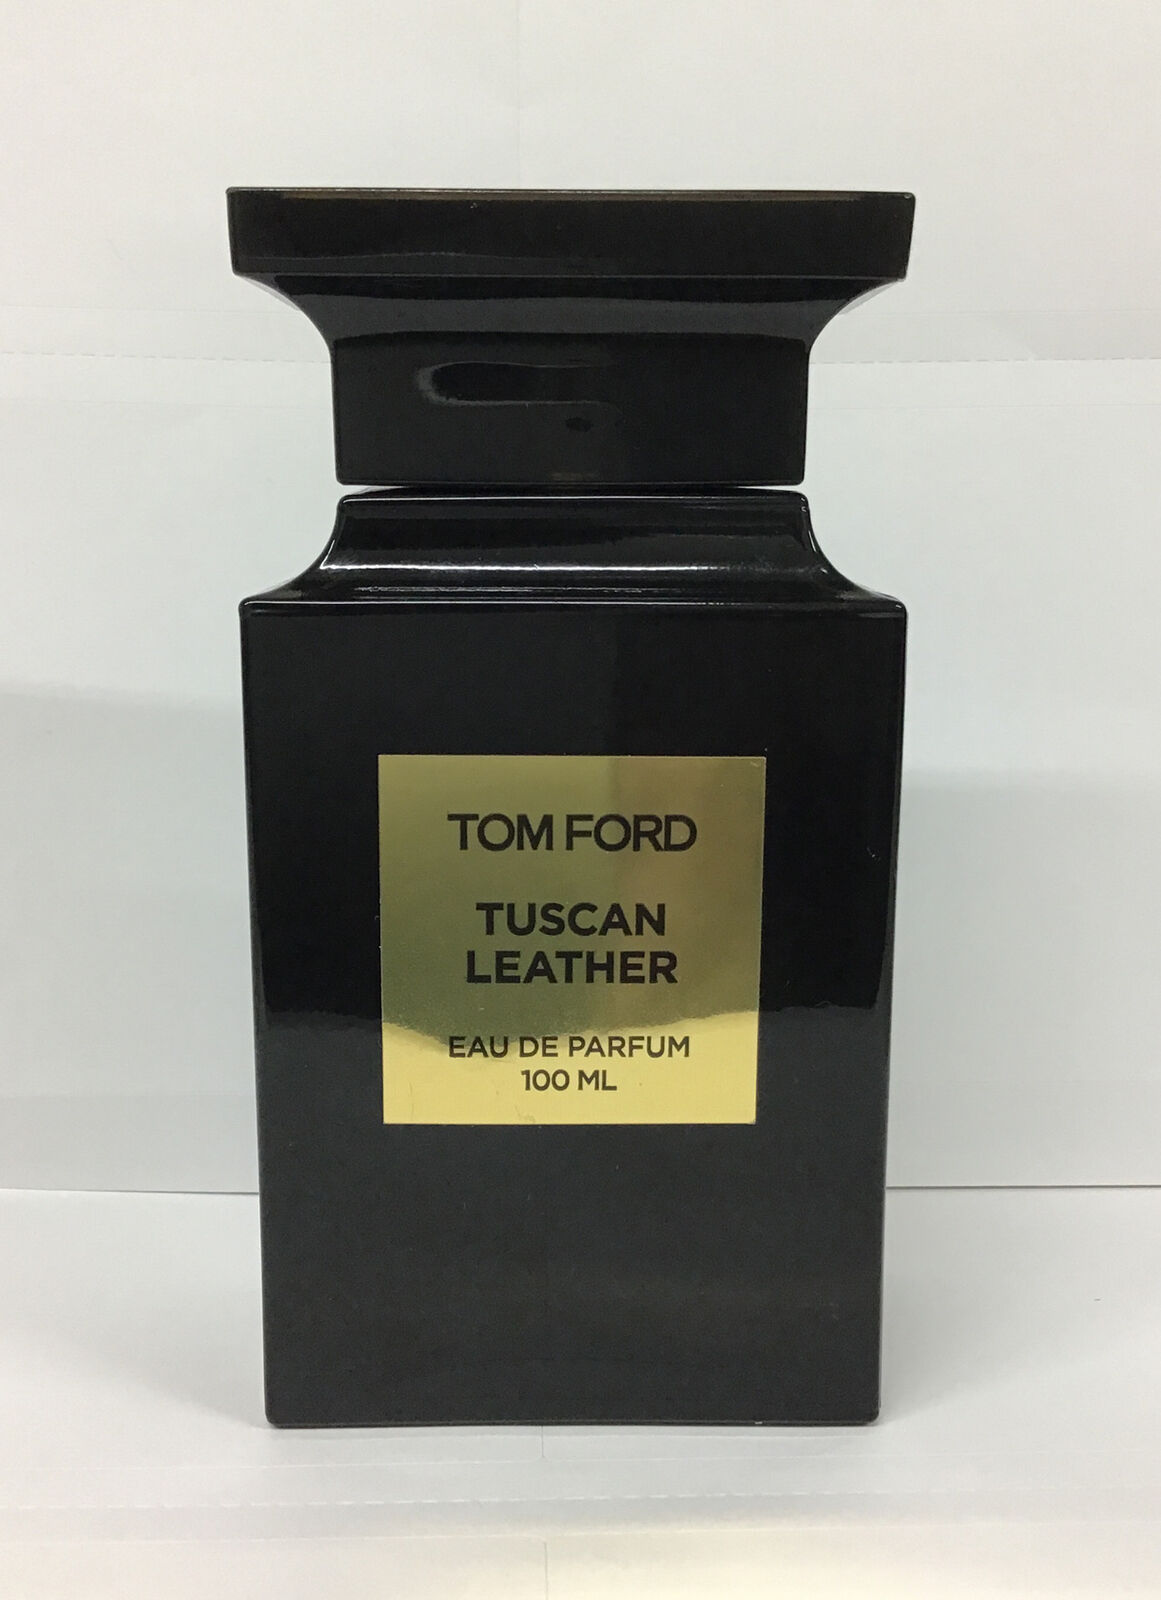 Tom Ford Tuscan Leather Eau De Parfum Spray 3.4 Fl Oz/ 100 Ml, As Pictured. 